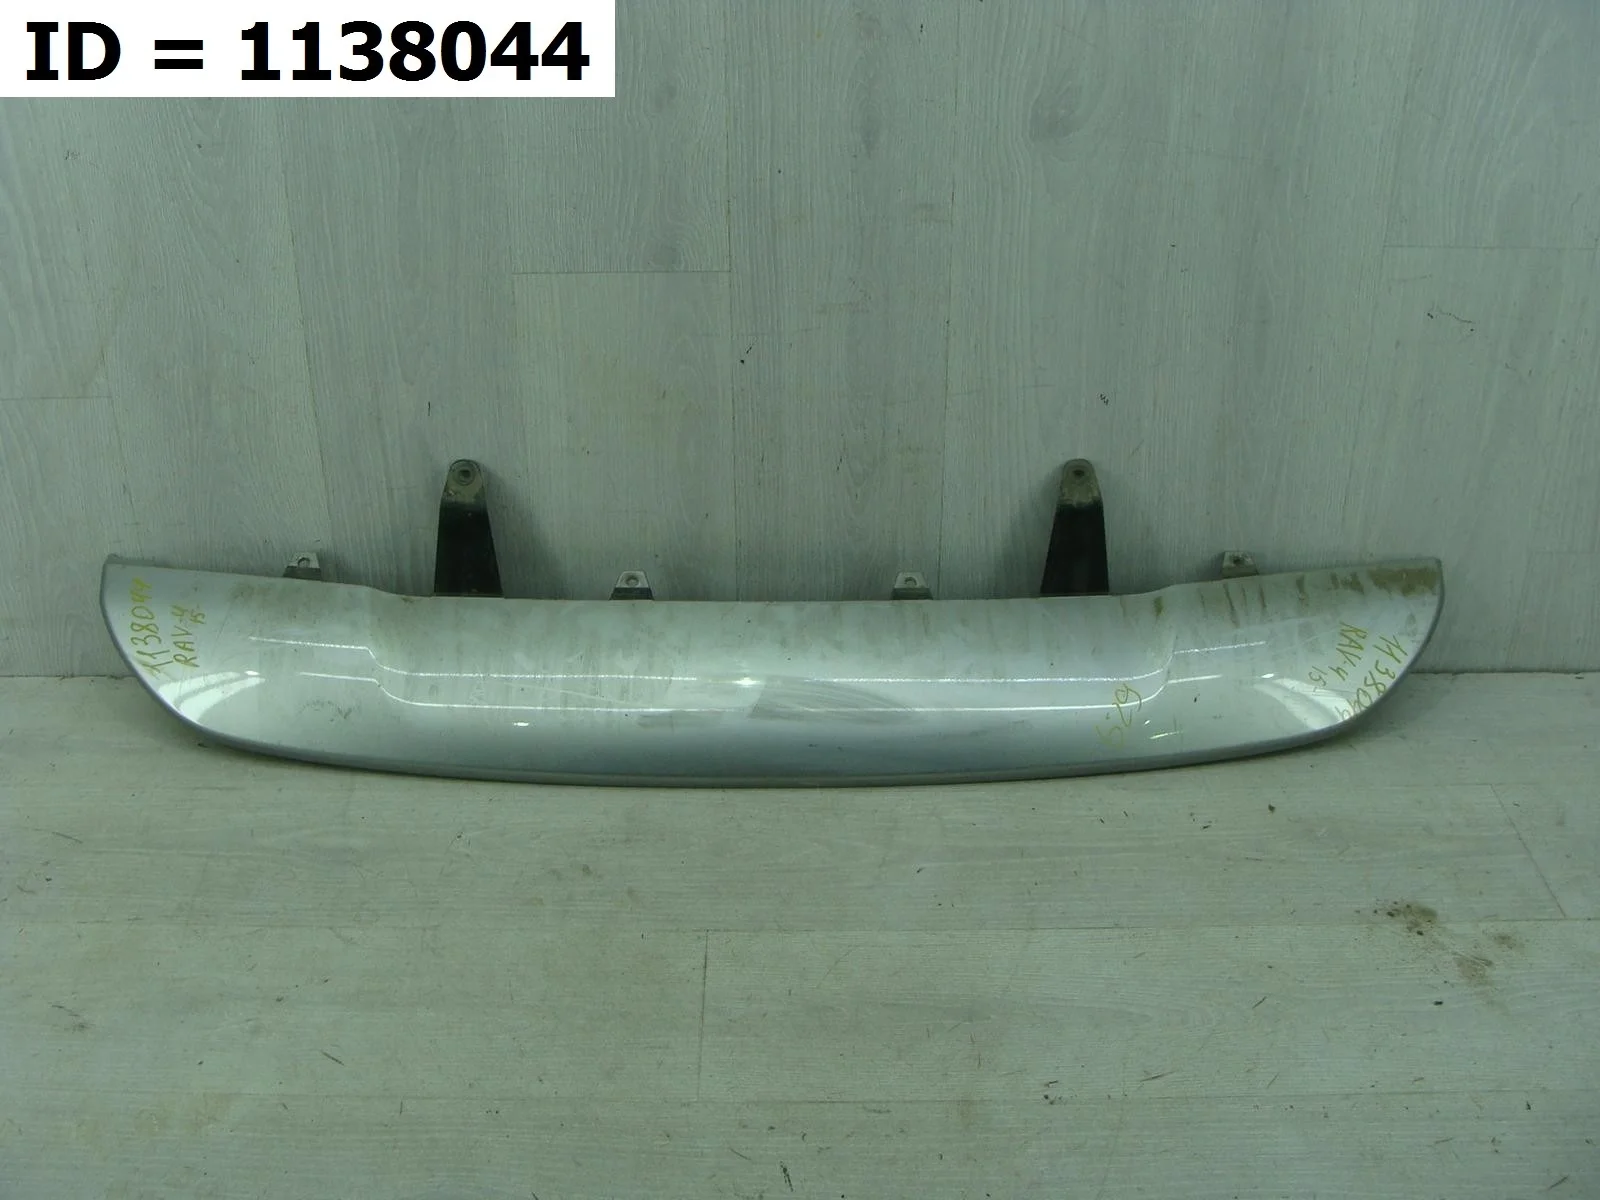 накладка на бампер задняя Toyota RAV4 4, CA40 ZSA44 Задний  52453-42900 2012-2019 (контрактная запчасть)